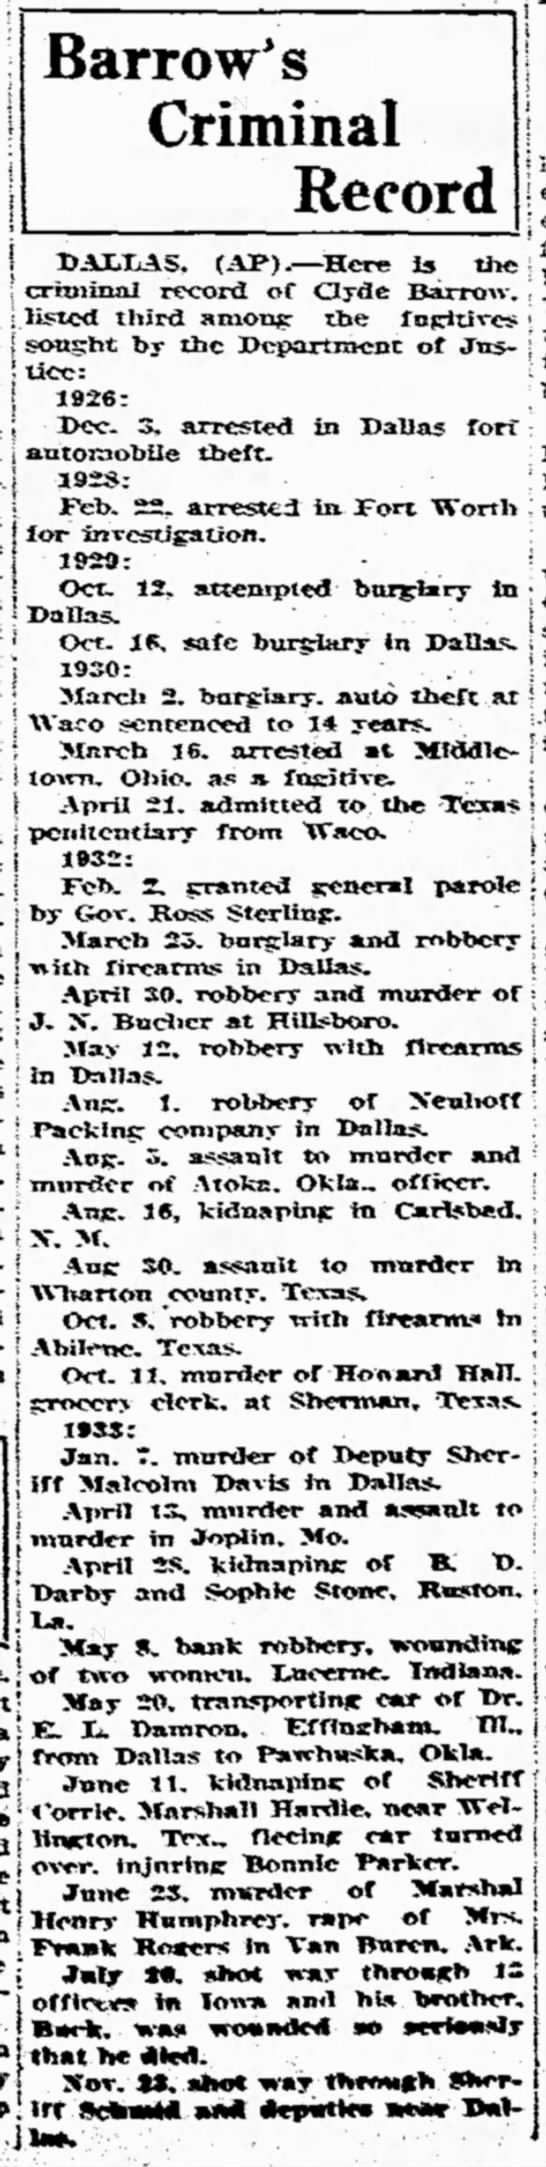 Clyde Barrow's criminal record from Dec 1926 through Nov 1933 - 